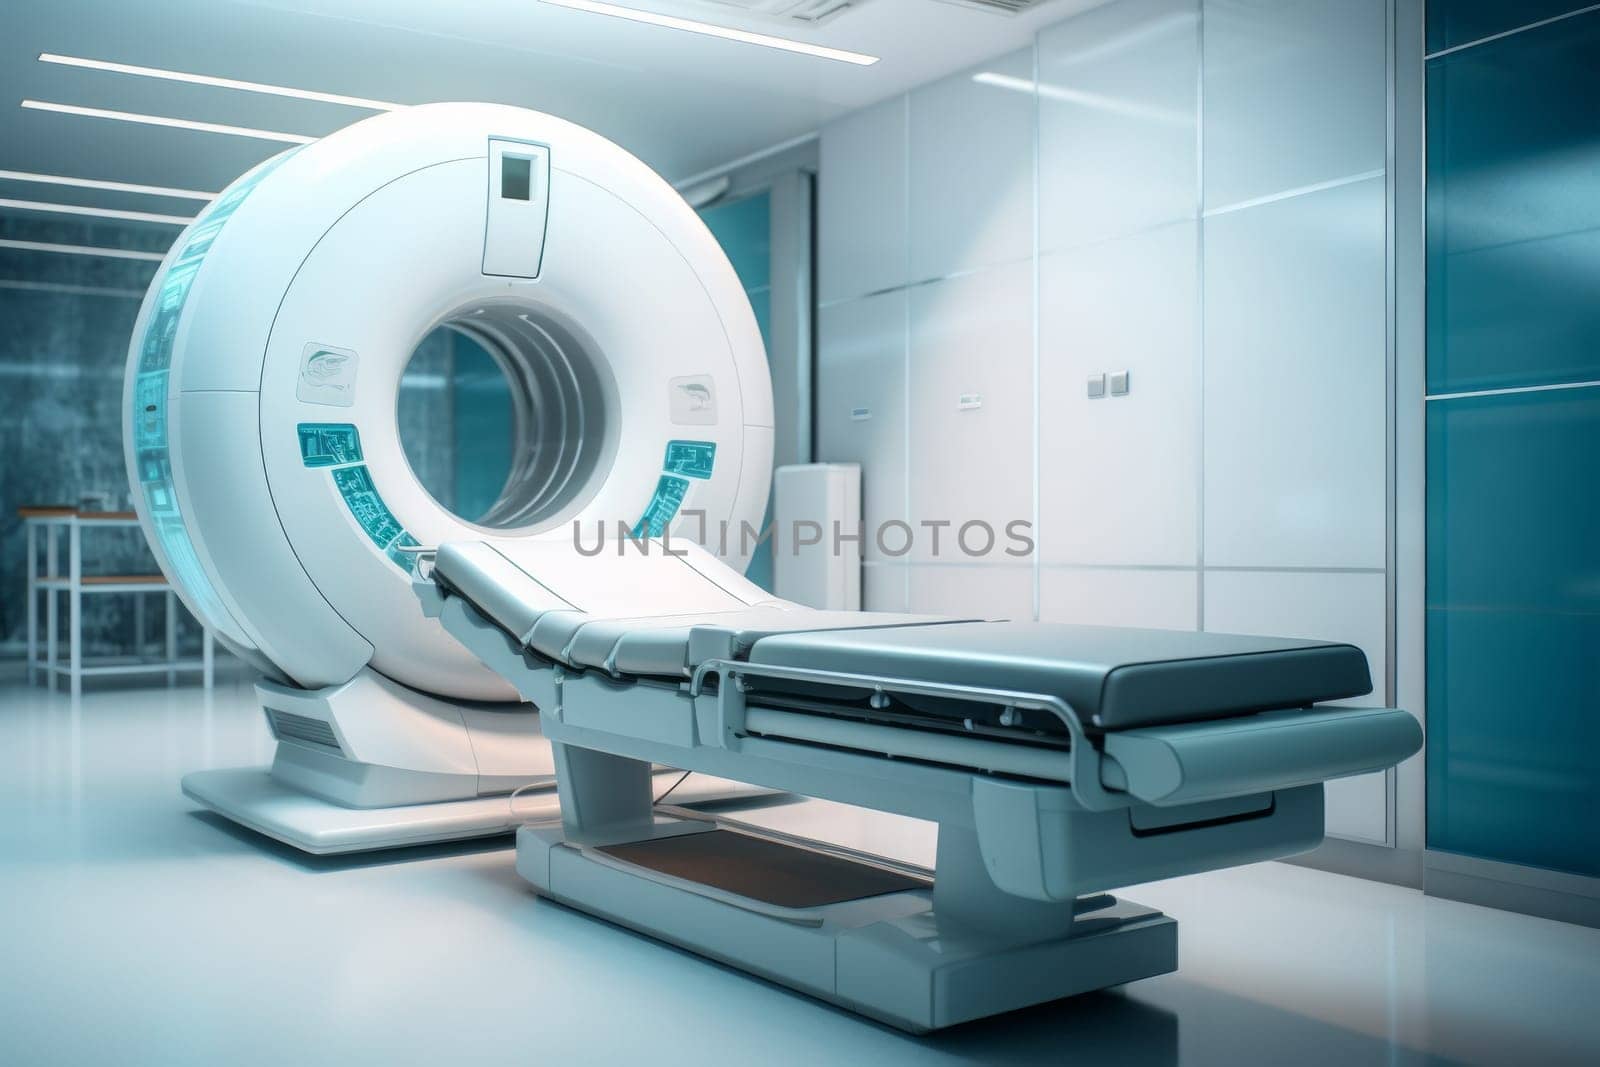 Mri or Computed tomography scan medical diagnosis machine by rusak